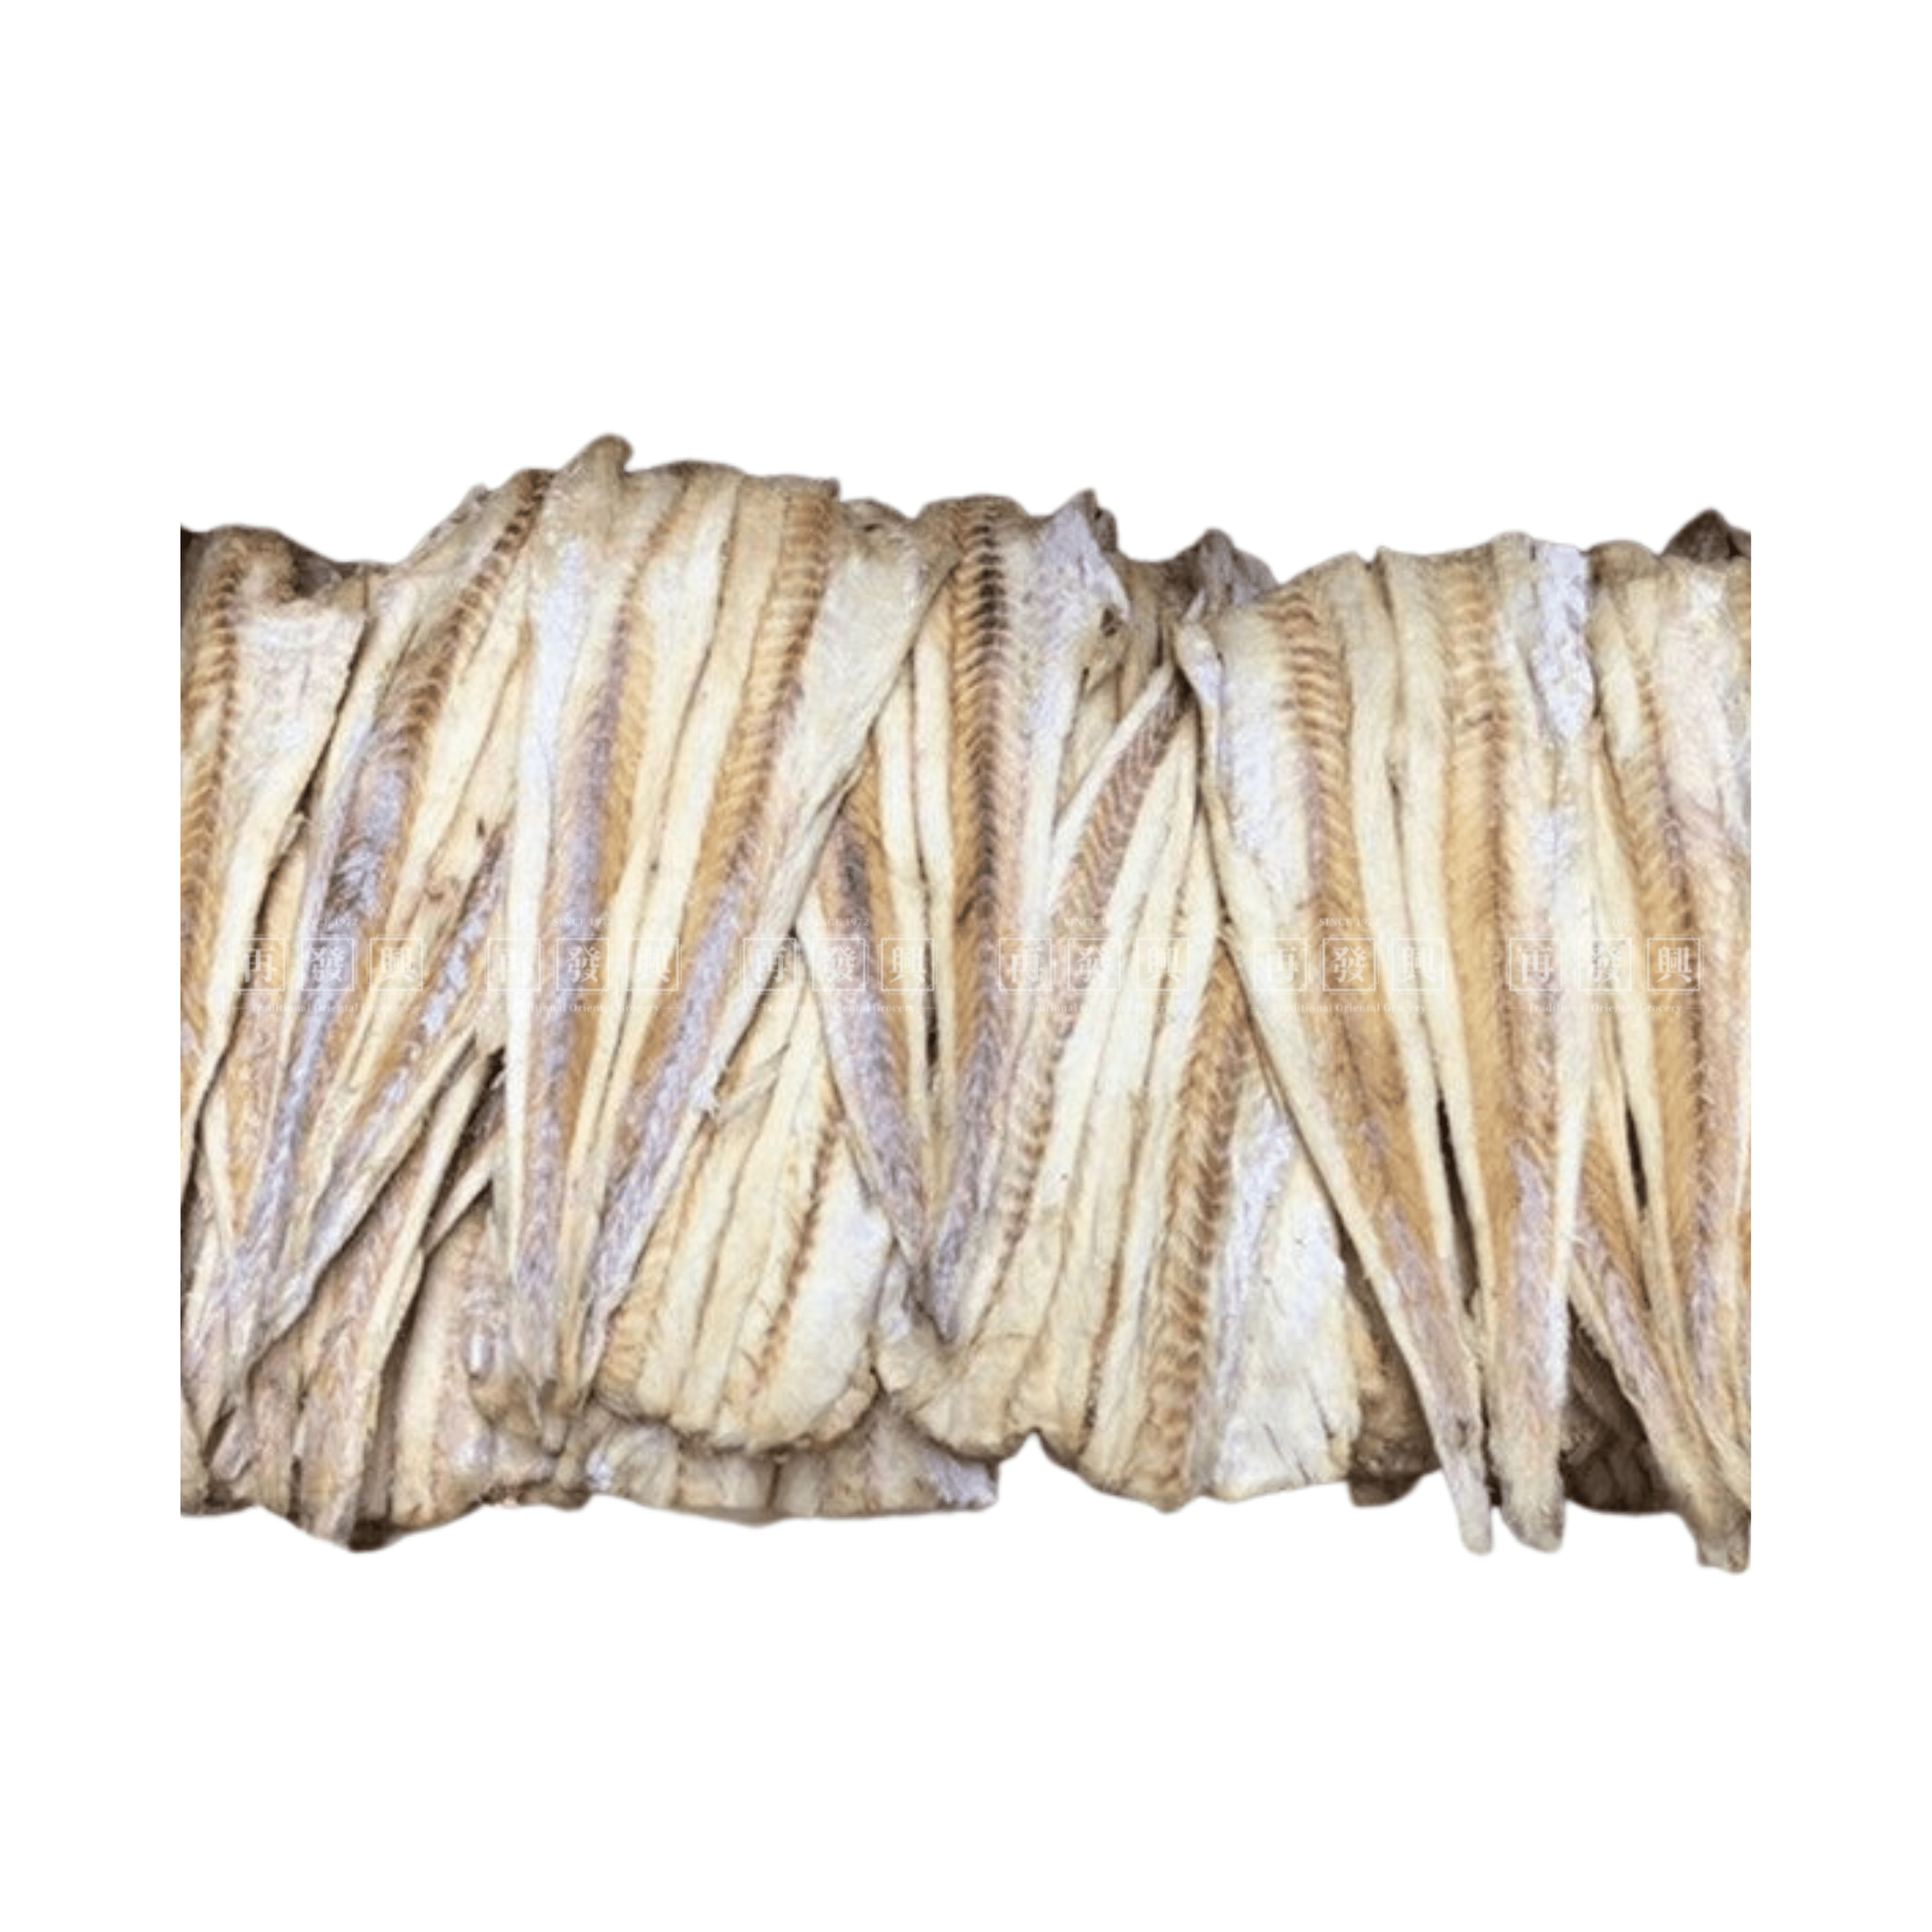 Dried Cod Fish 100g